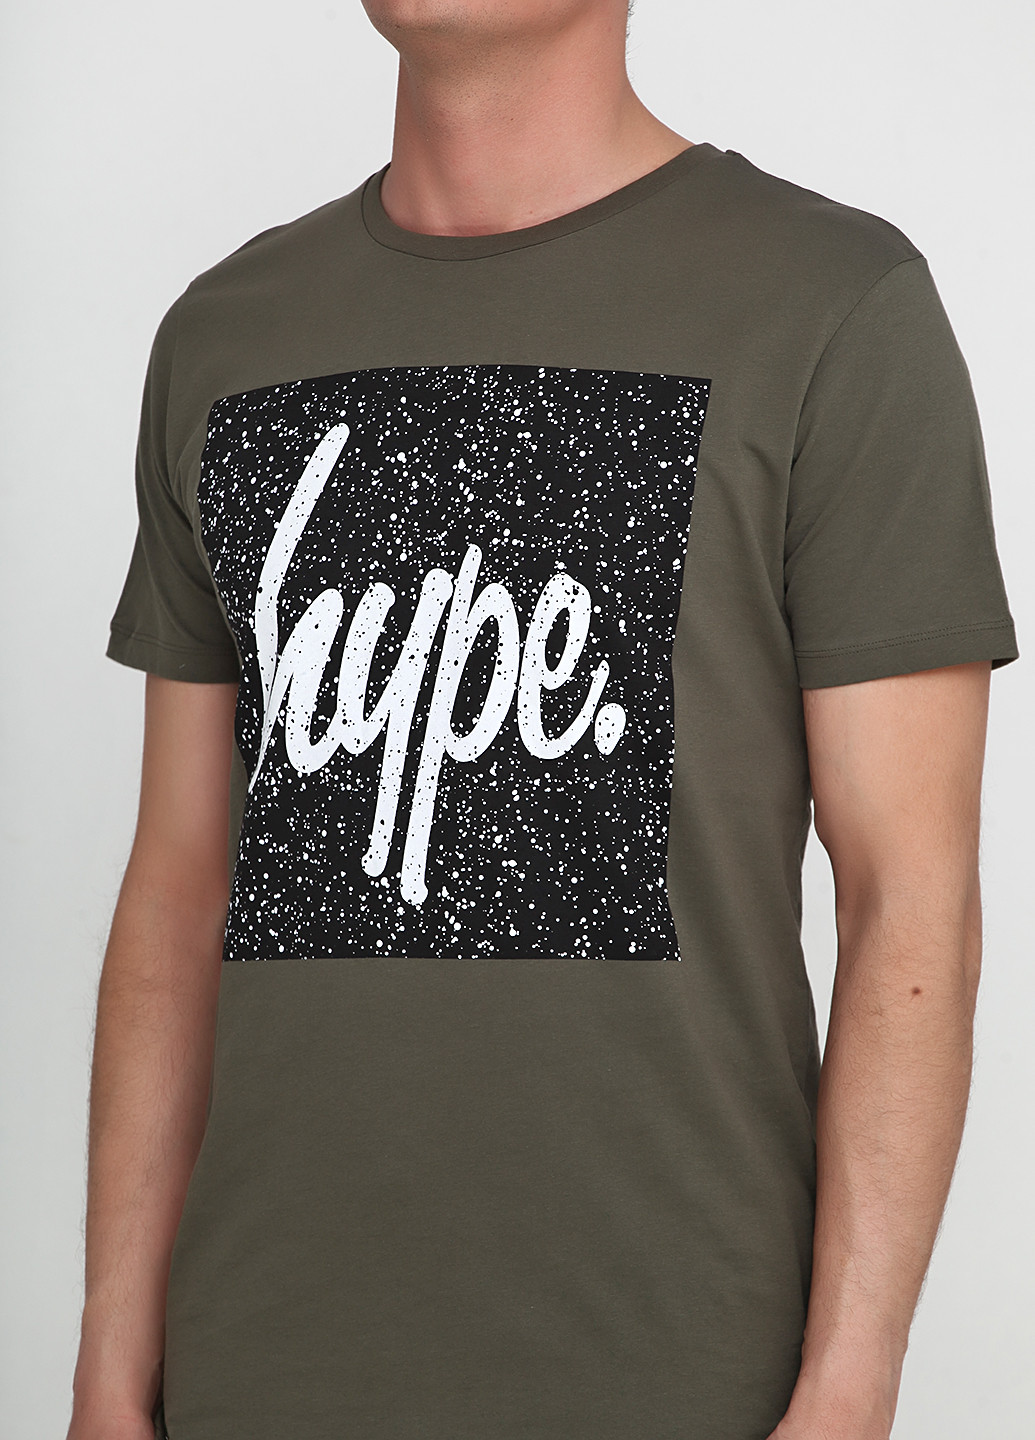 Хаки (оливковая) футболка Just Hype